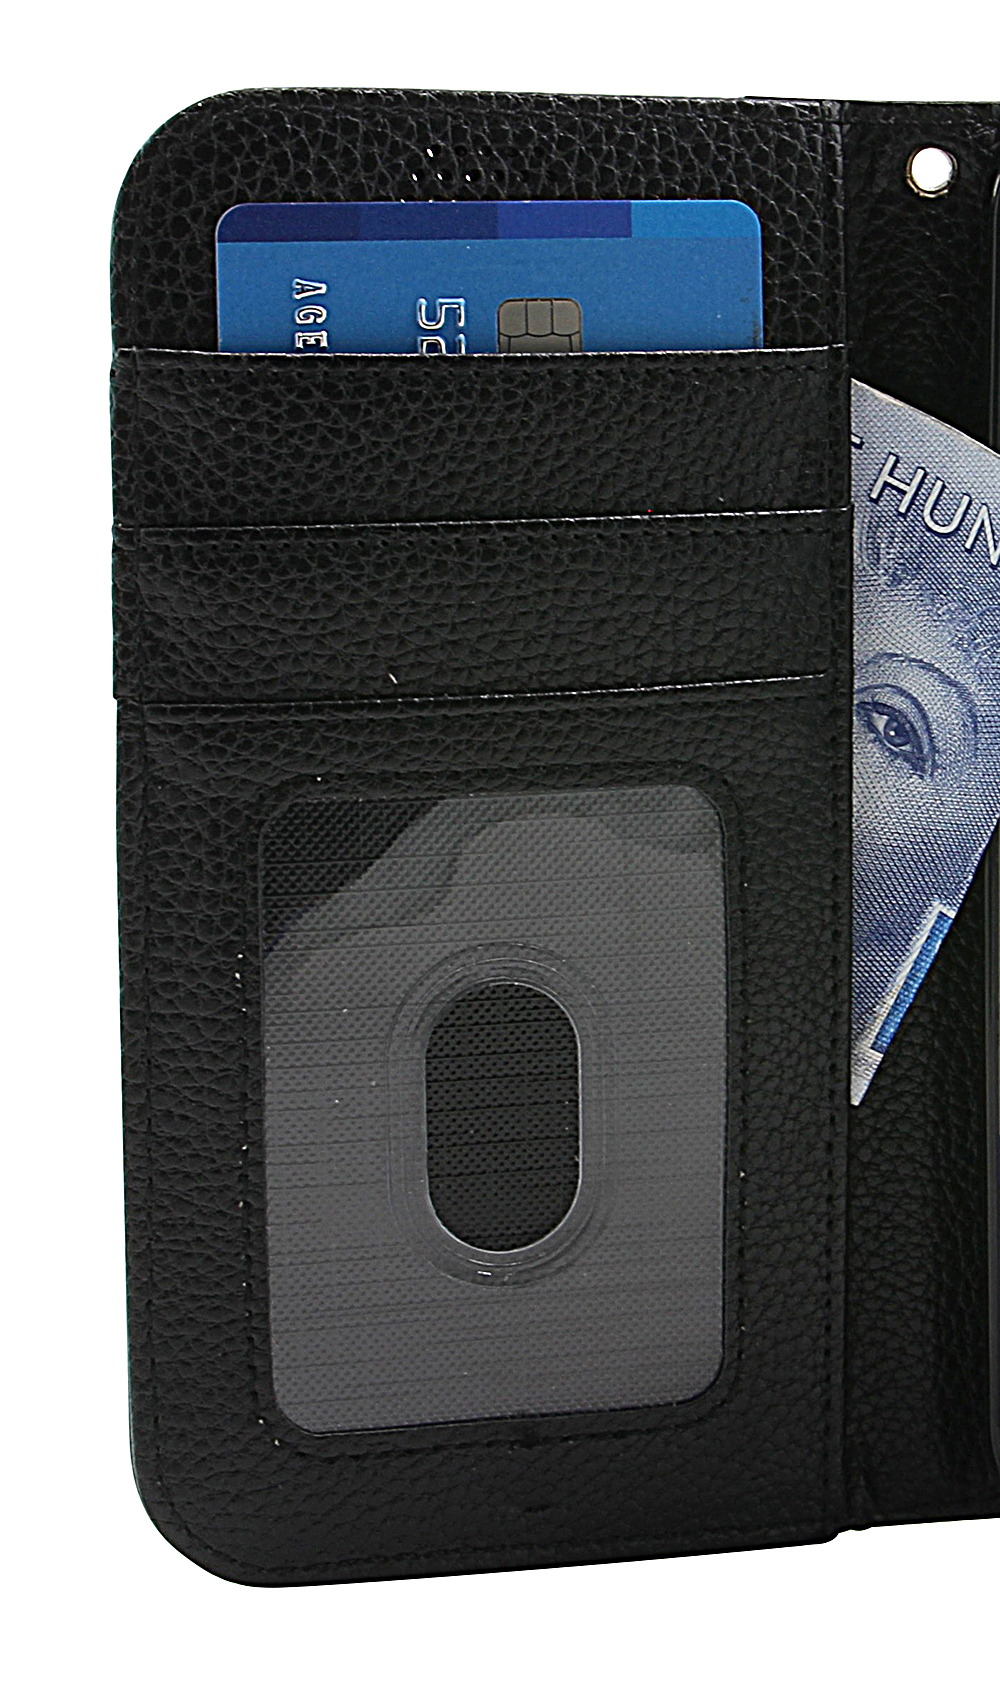 New Standcase Wallet Sony Xperia XZ3